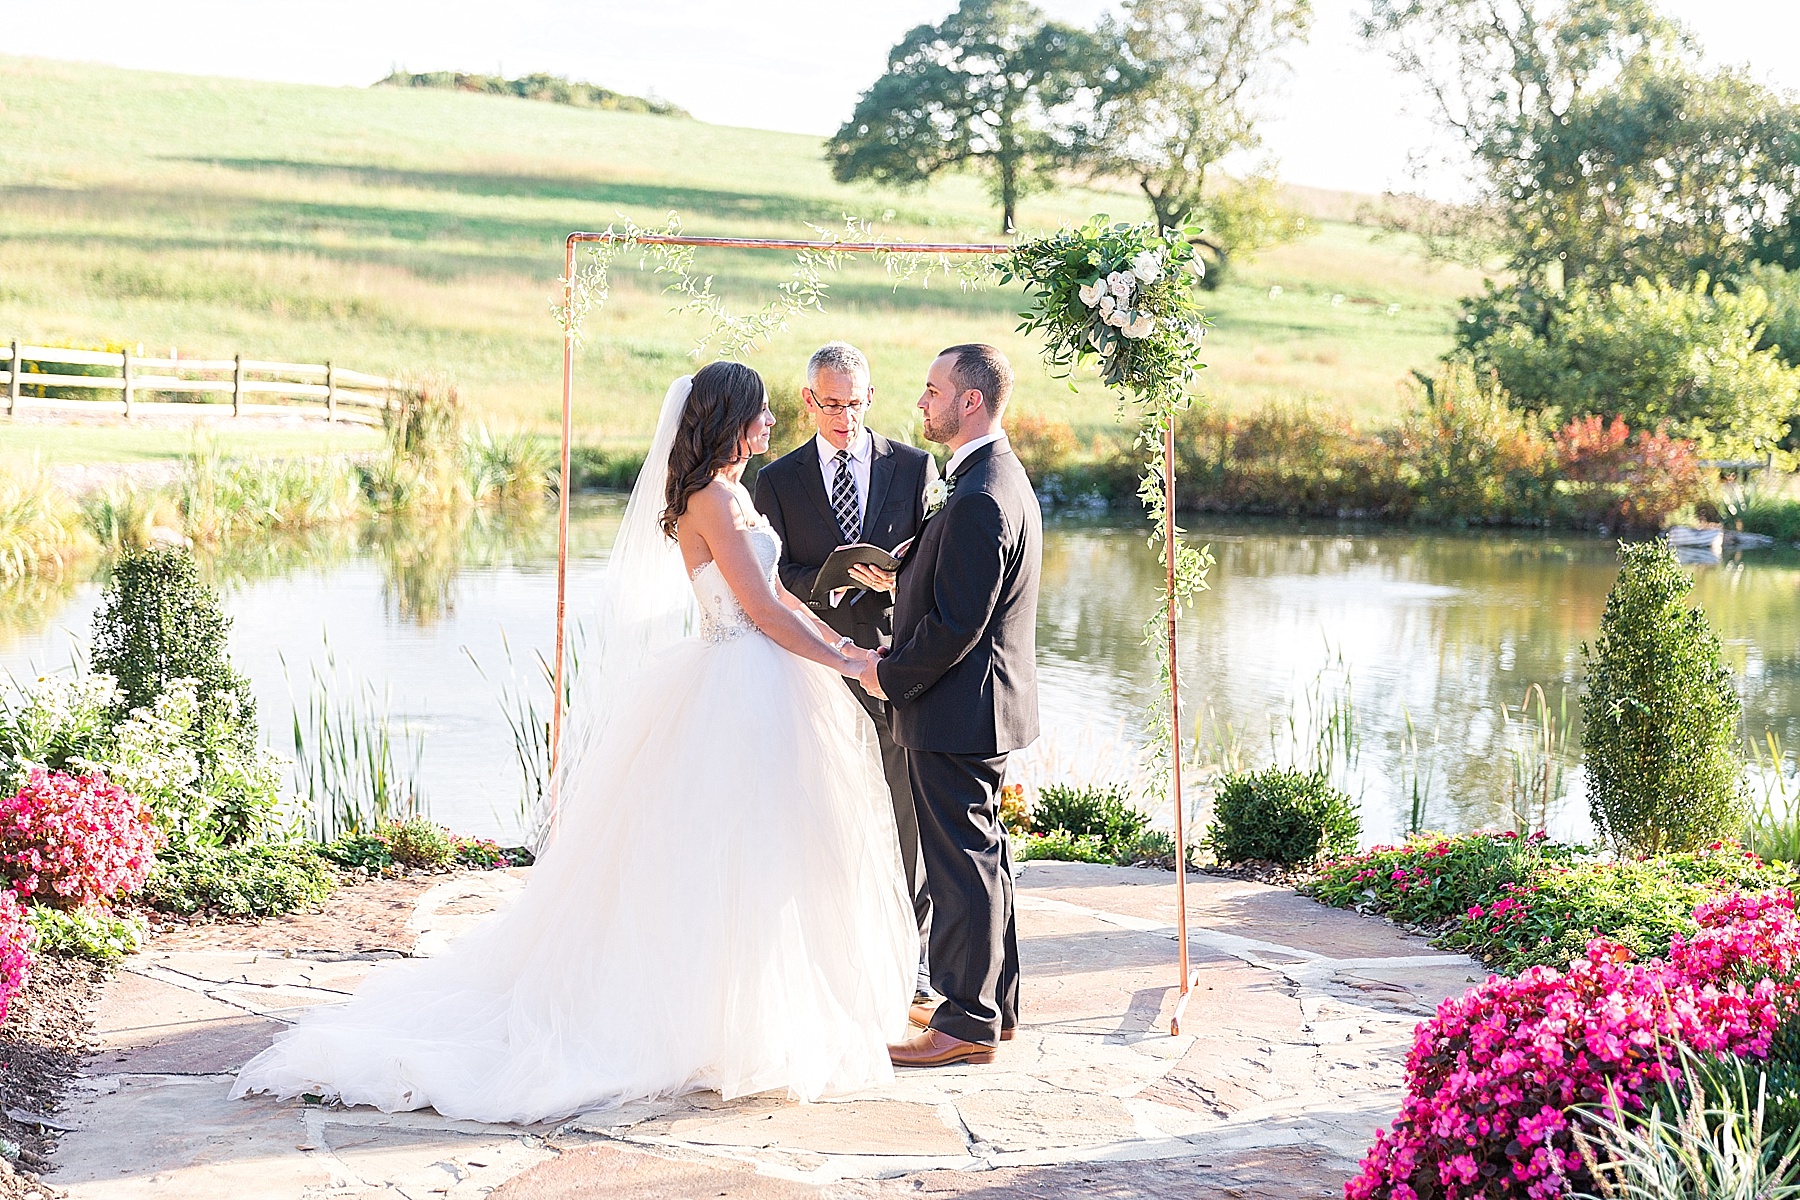 Glen Ellen Farm wedding ceremony photographed by Alexandra Mandato Photography